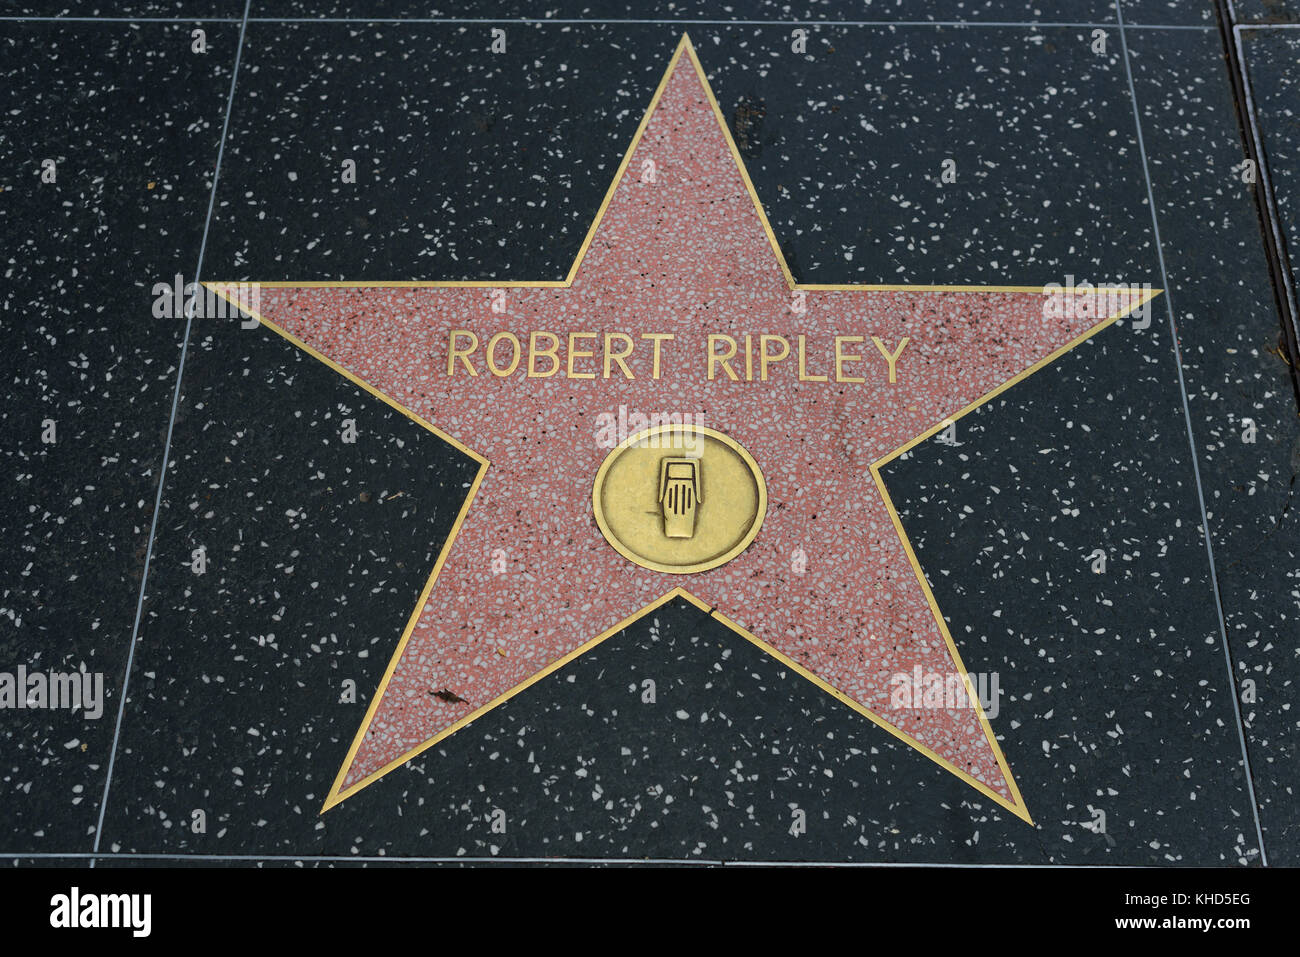 HOLLYWOOD, CA - DICEMBRE 06: Robert Ripley stella sulla Hollywood Walk of Fame a Hollywood, California il 6 dicembre 2016. Foto Stock